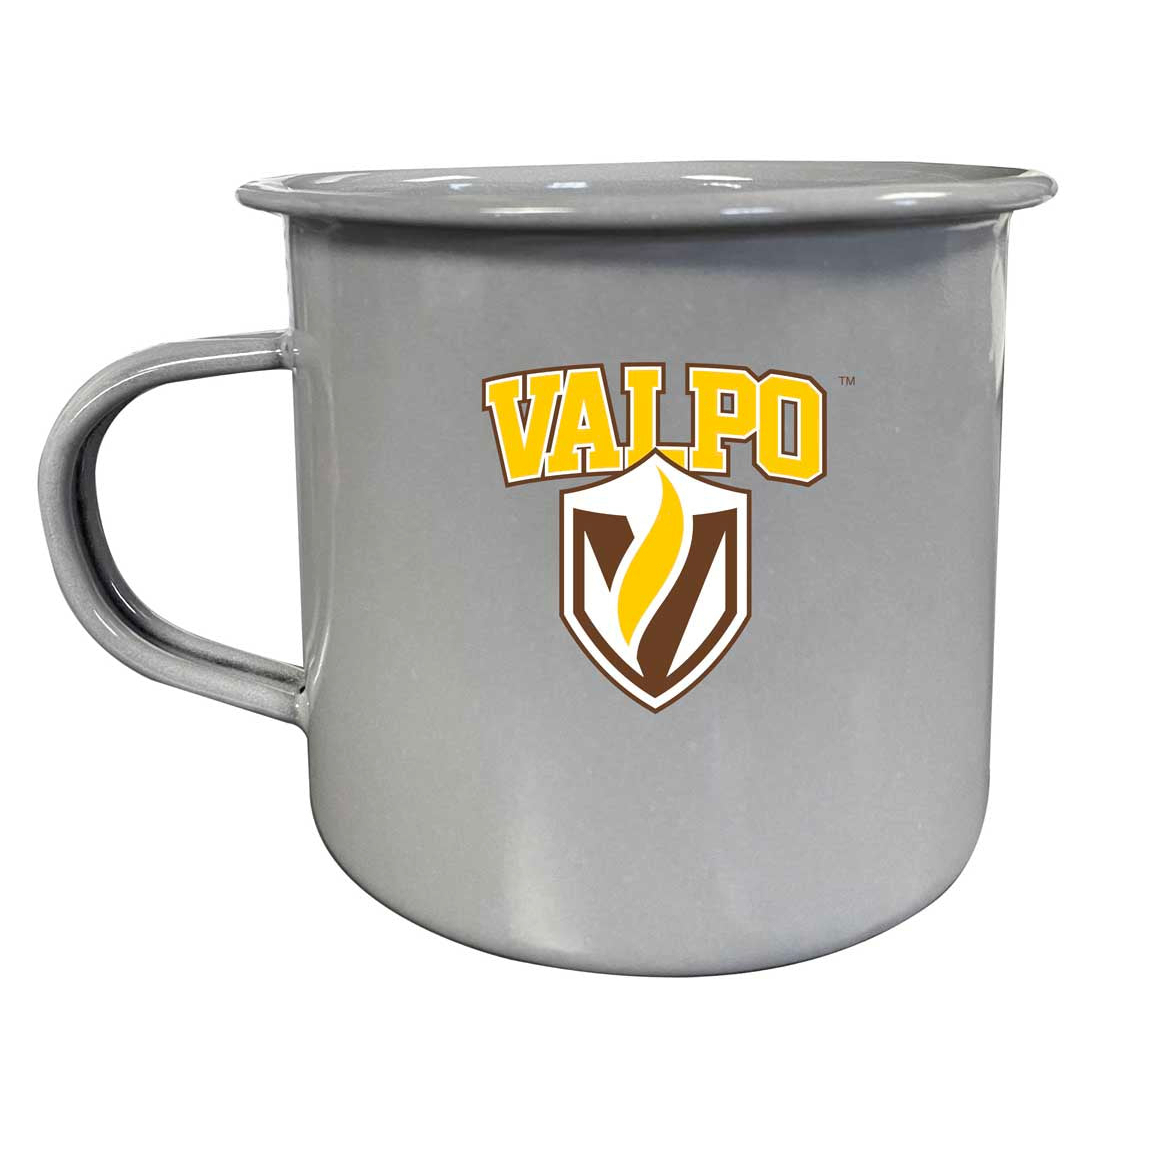 Valparaiso University Tin Camper Coffee Mug - Choose Your Color - Navy